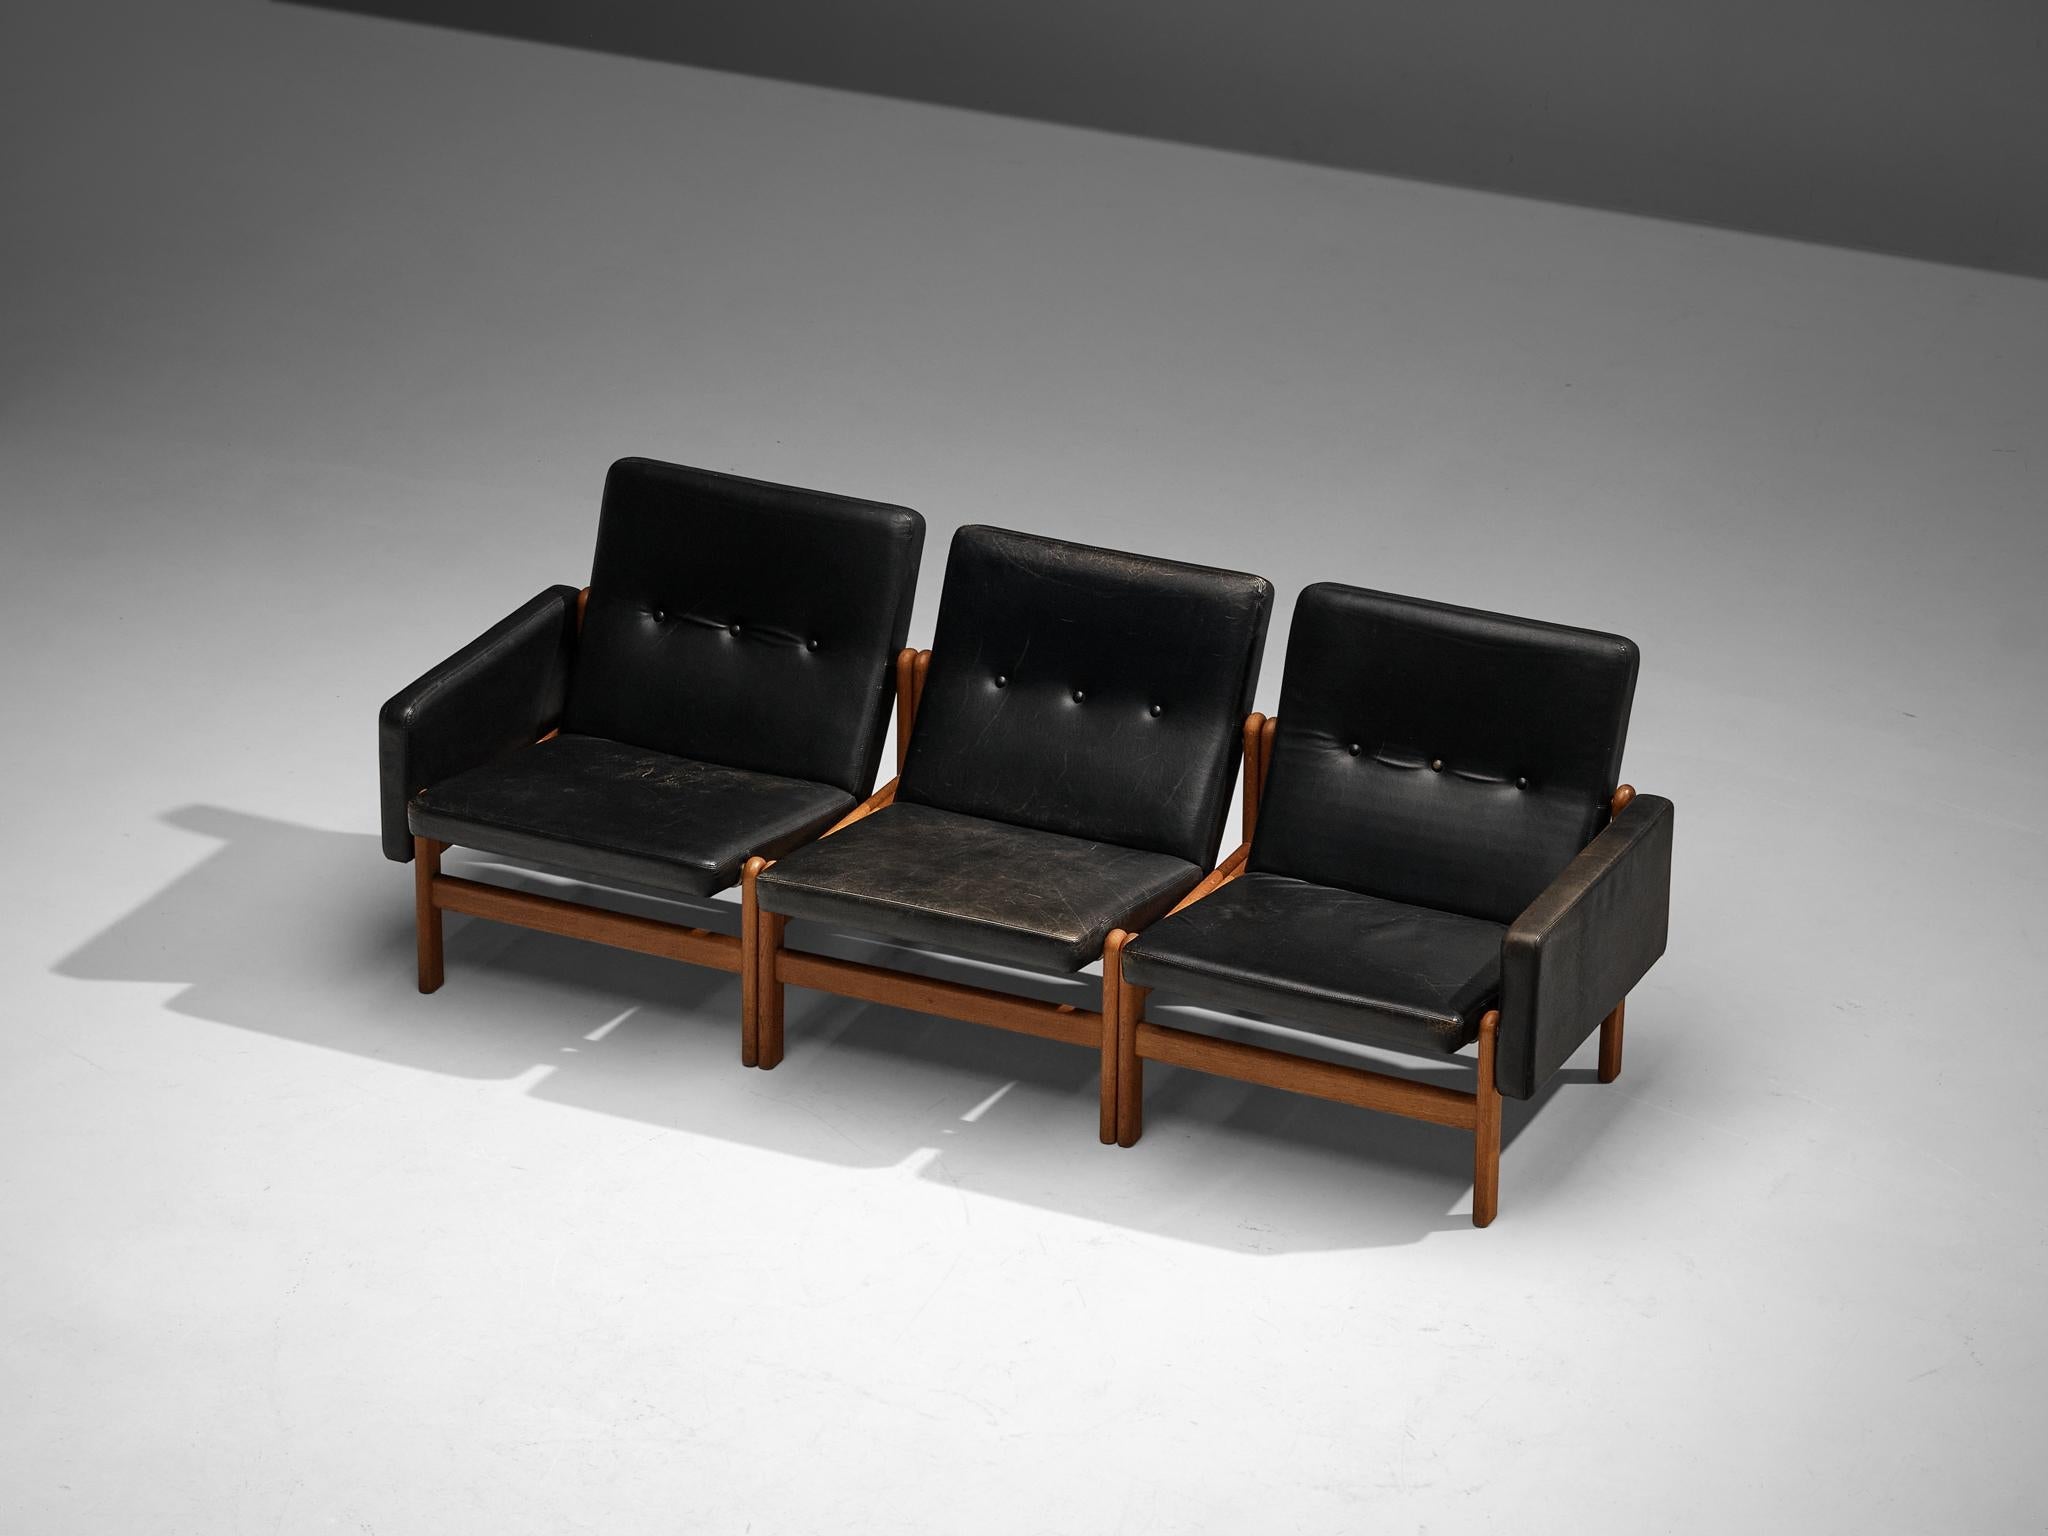 Jørgen Bækmark for FDB Møbler Three Seat Modular Sofa in Oak and Leather